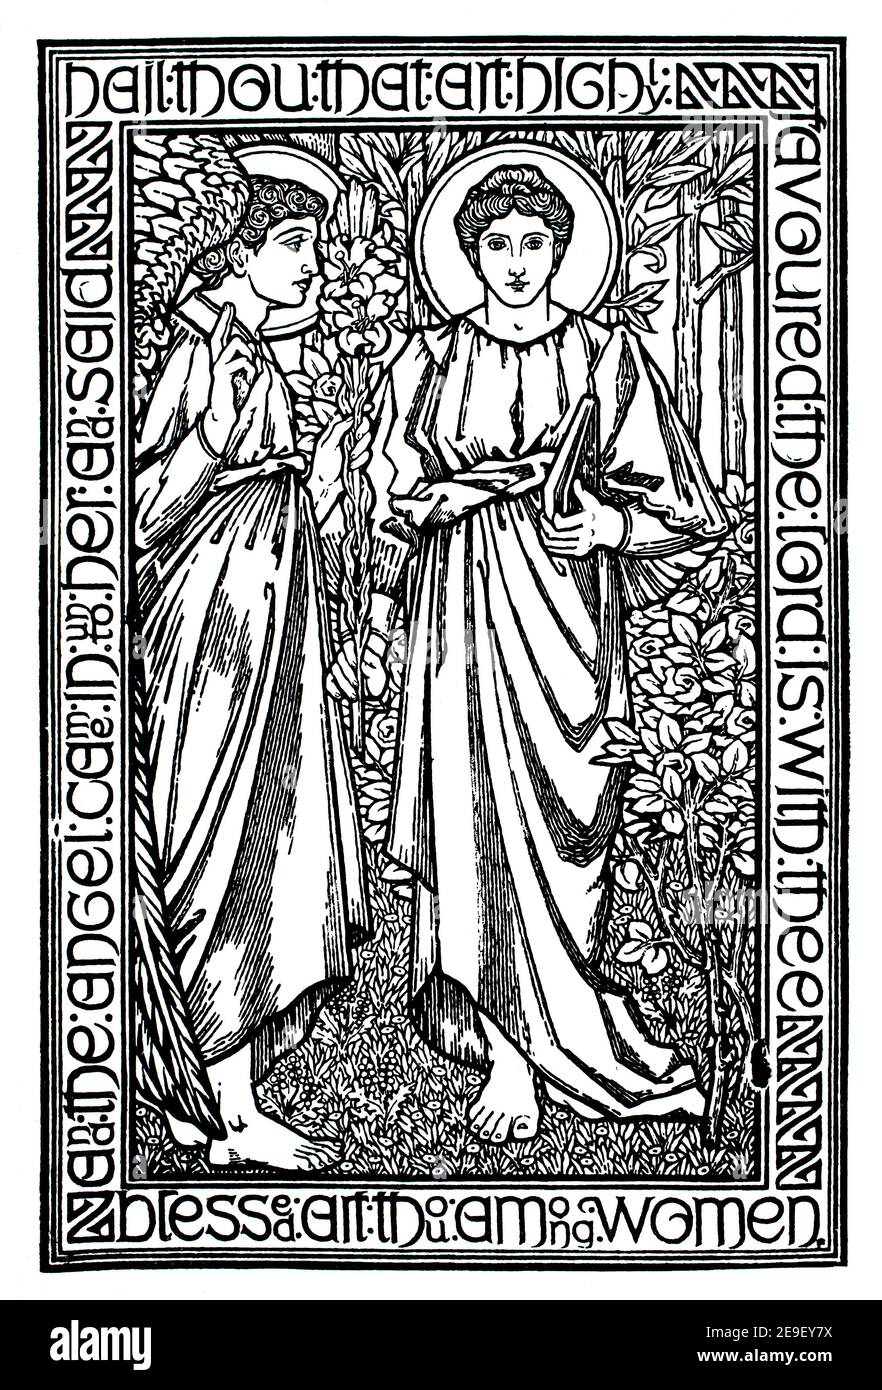 The Annunciation, Linienillustration von Selwyn Image für die Fitzroy Picture Series, 1893 Band 1 des Studio an Illustrated Magazine of Fine and Stockfoto